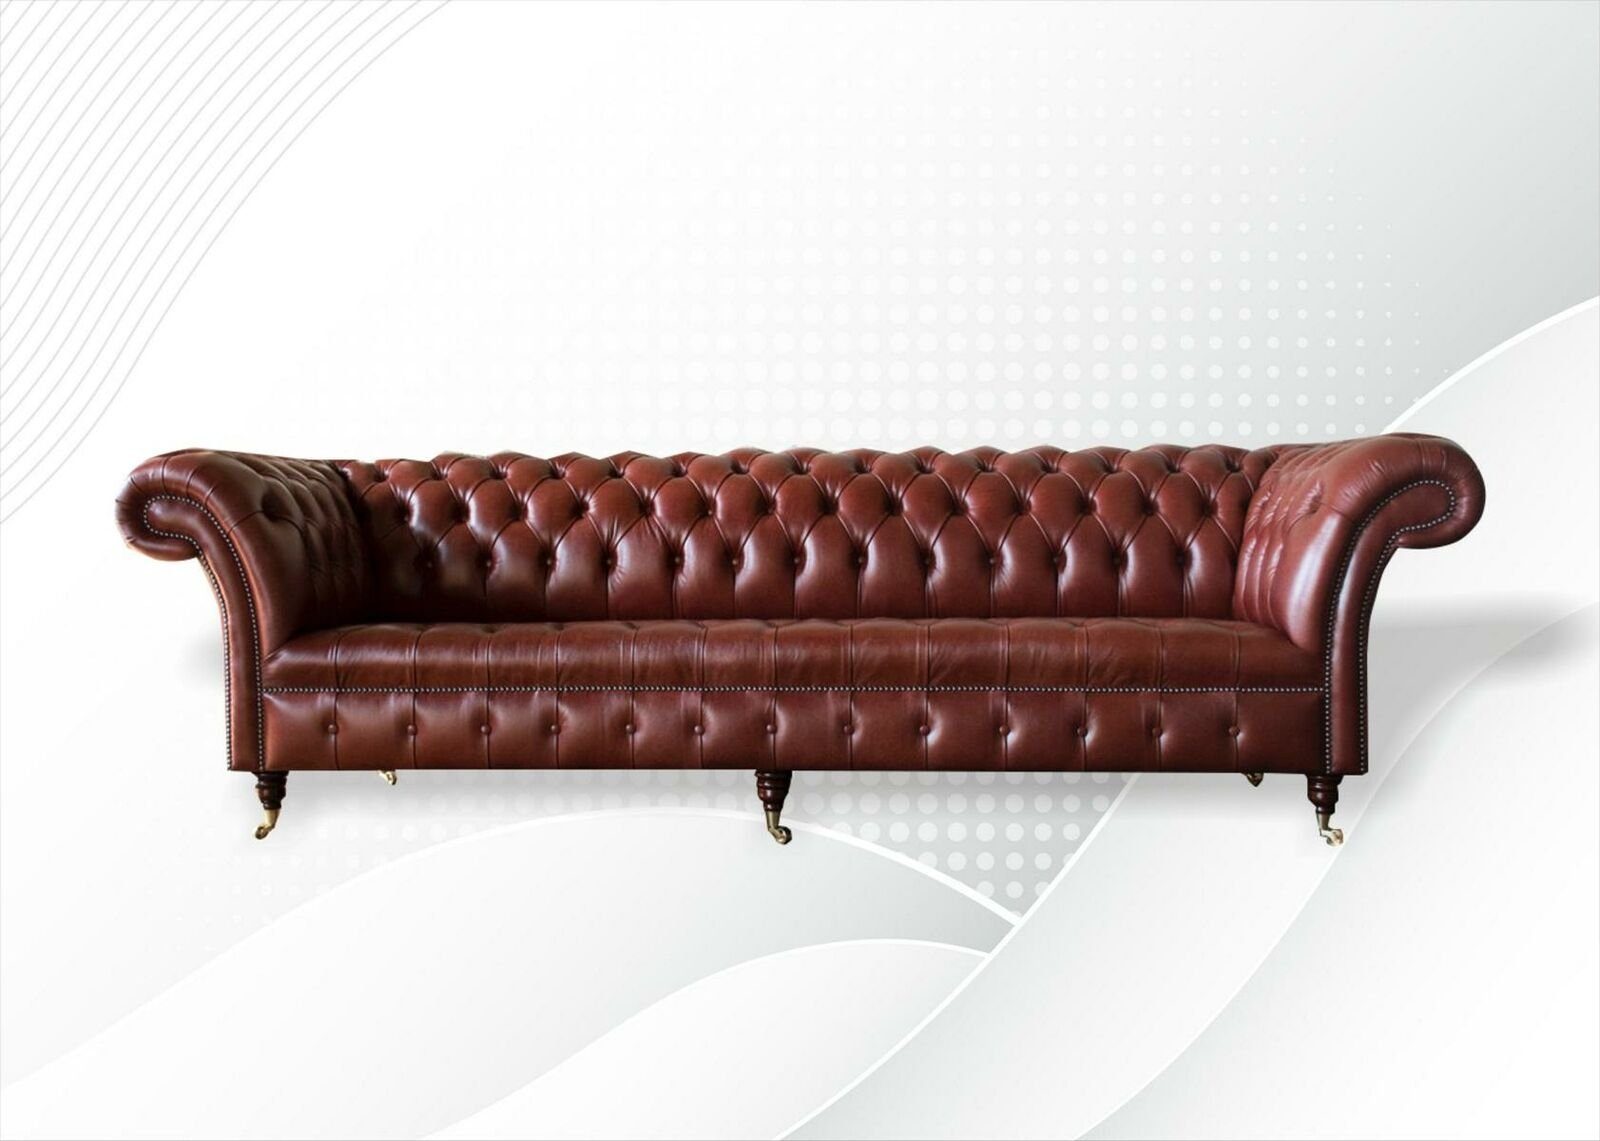 JVmoebel Chesterfield-Sofa Großes Braunes Chesterfield Sofa xxl 4-Sitzer Modern Ledermöbel Neu, Made in Europe